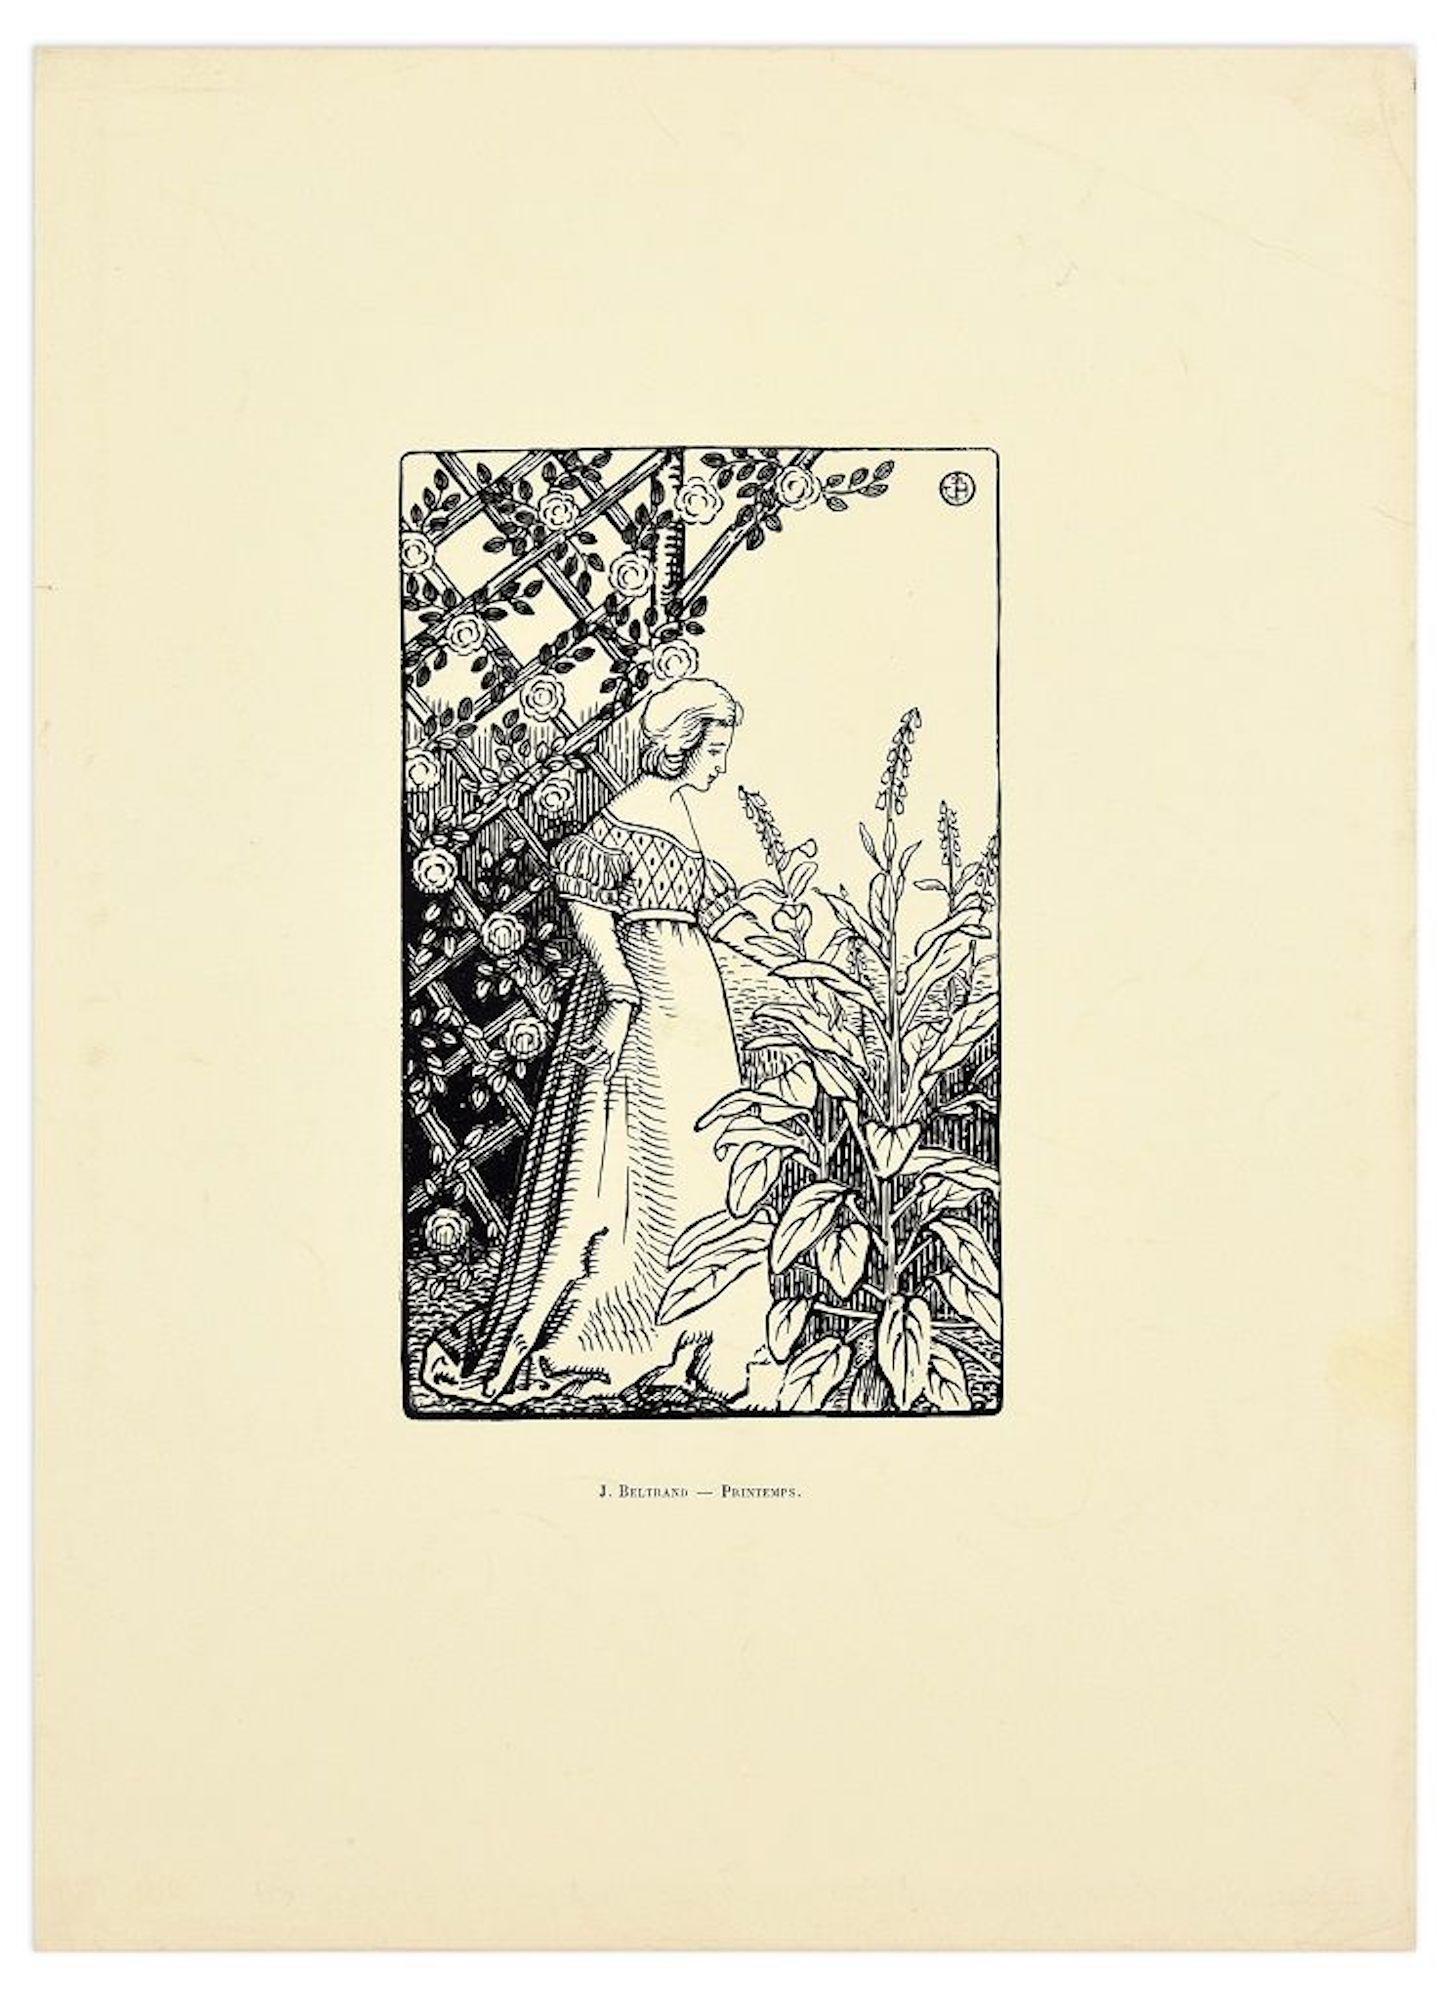 Jacques Beltrand Figurative Print - Printemps - Original Woodcut Print by J. Beltrand - 1899